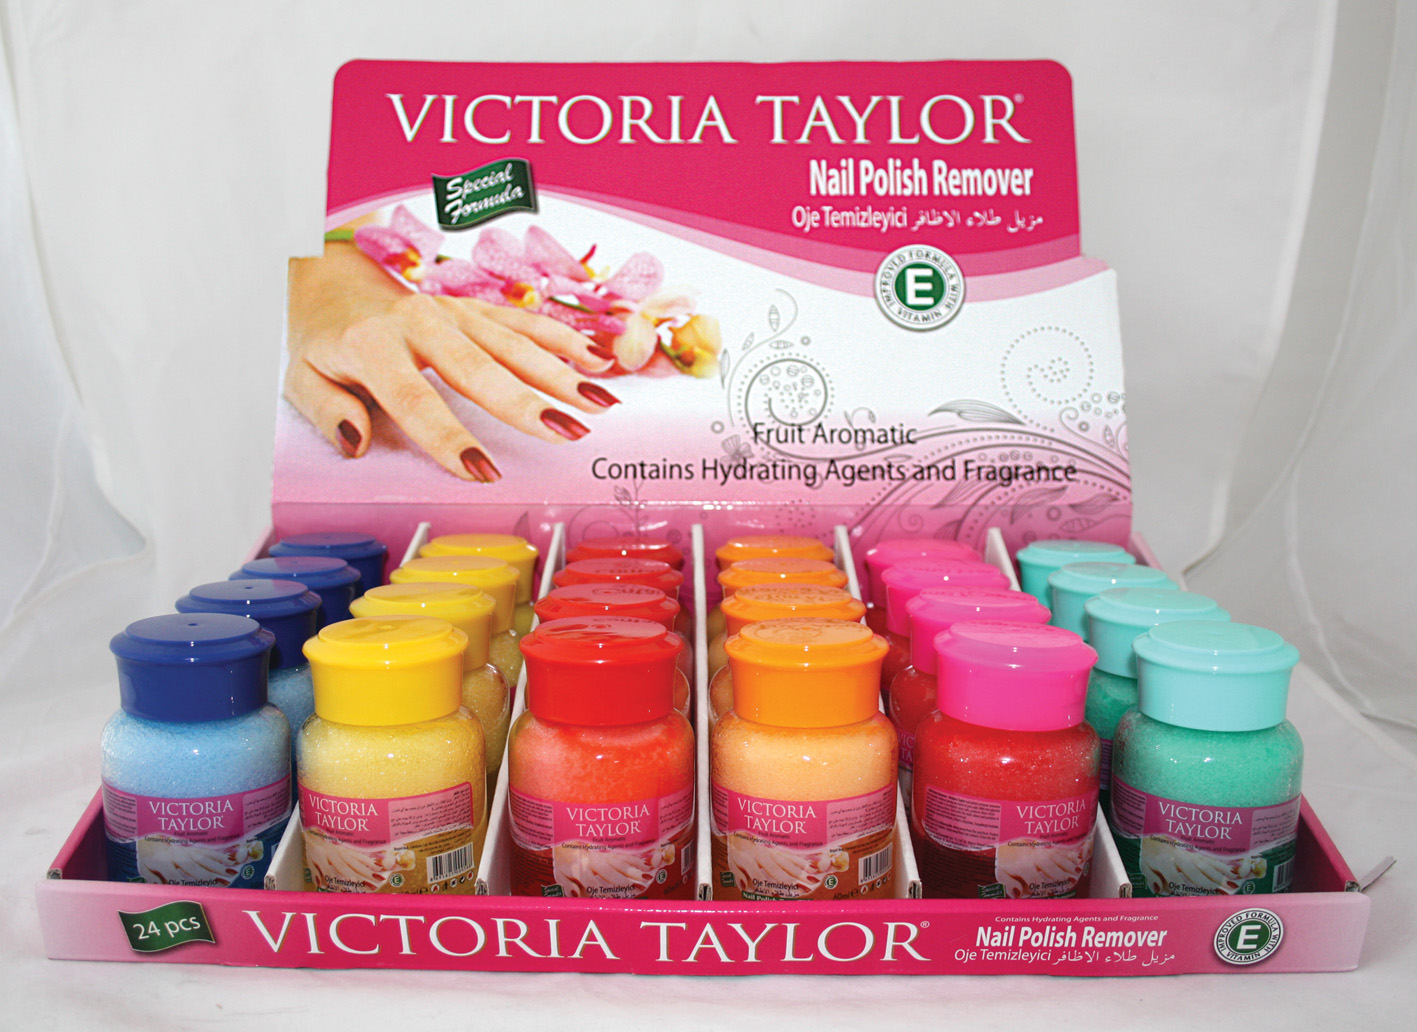 Victoria Taylor Nail polish remover sponges